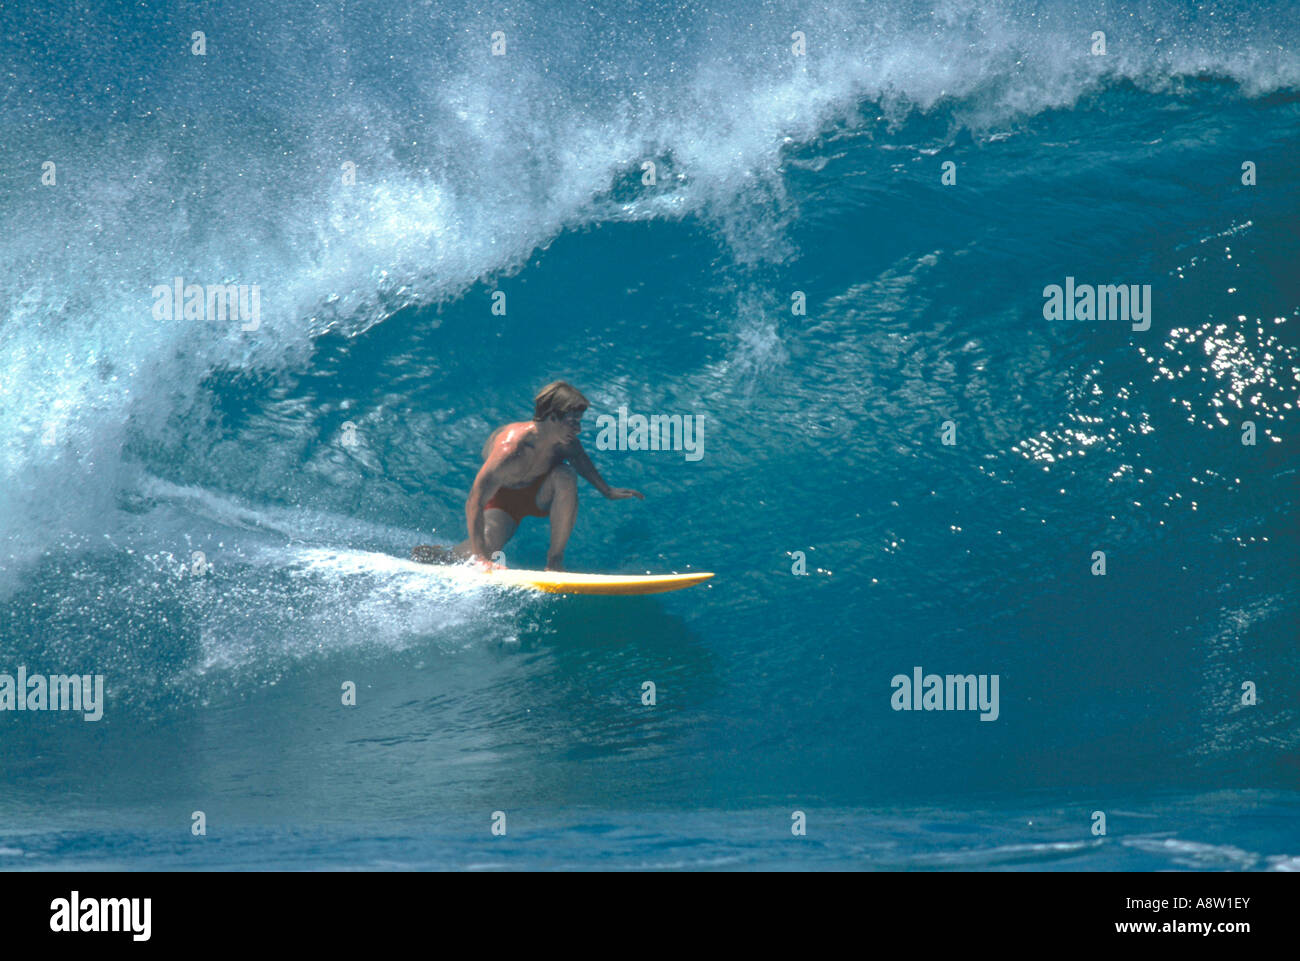 Man surfing barrel wave. Stock Photo